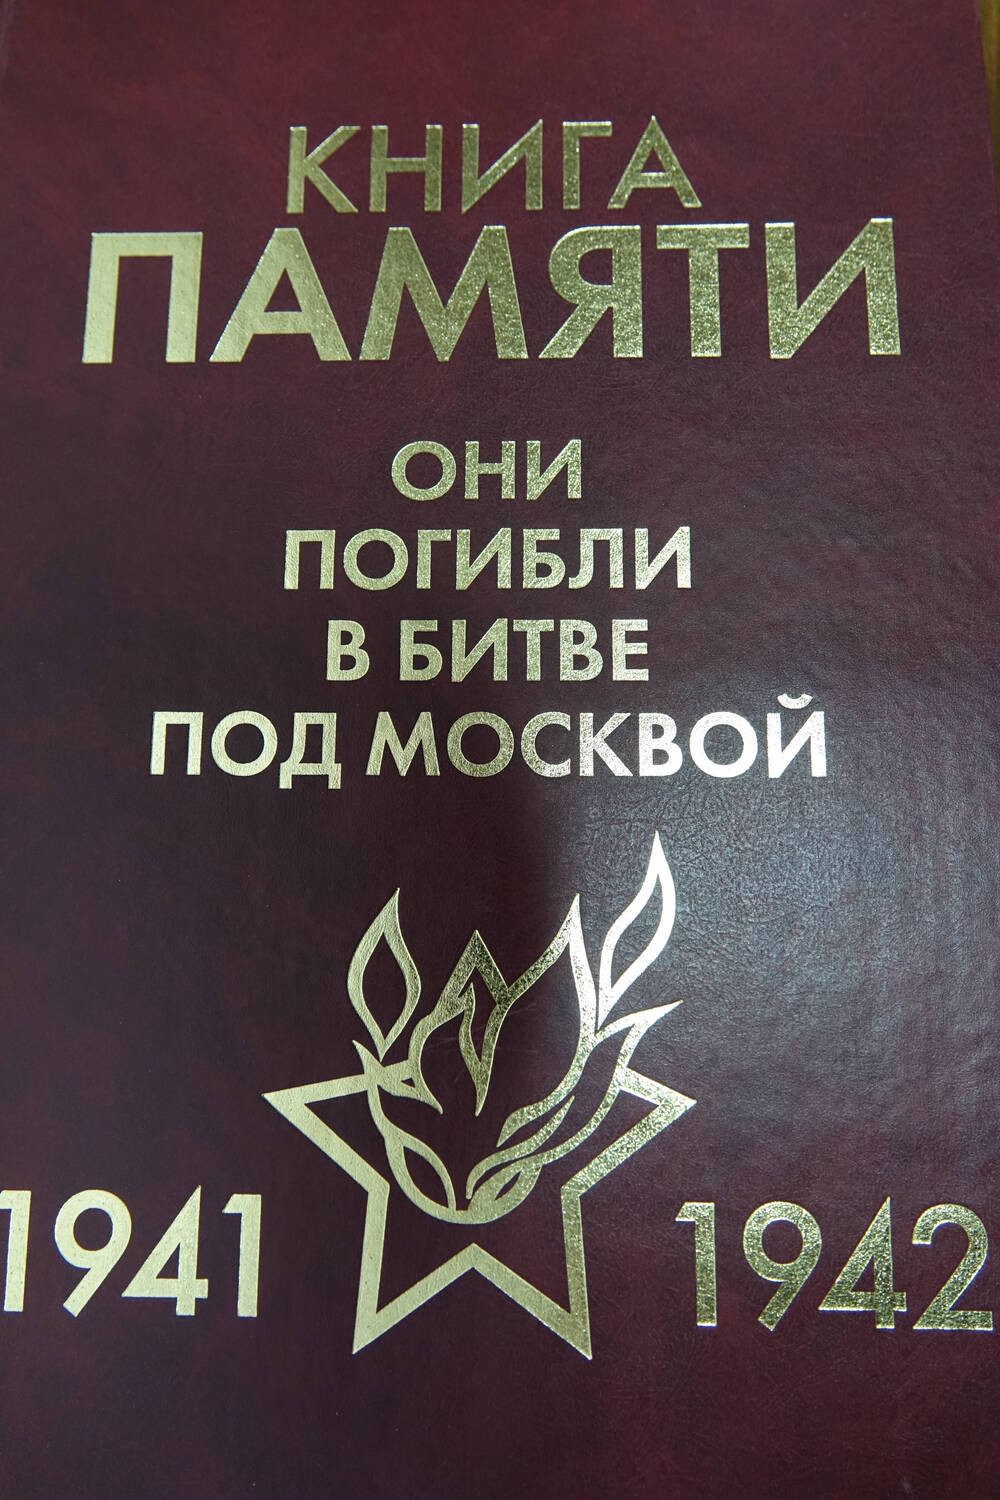 Книга Памяти «Они погибли в битве под Москвой   1941-1942гг.» Том 5 «Д-Е»